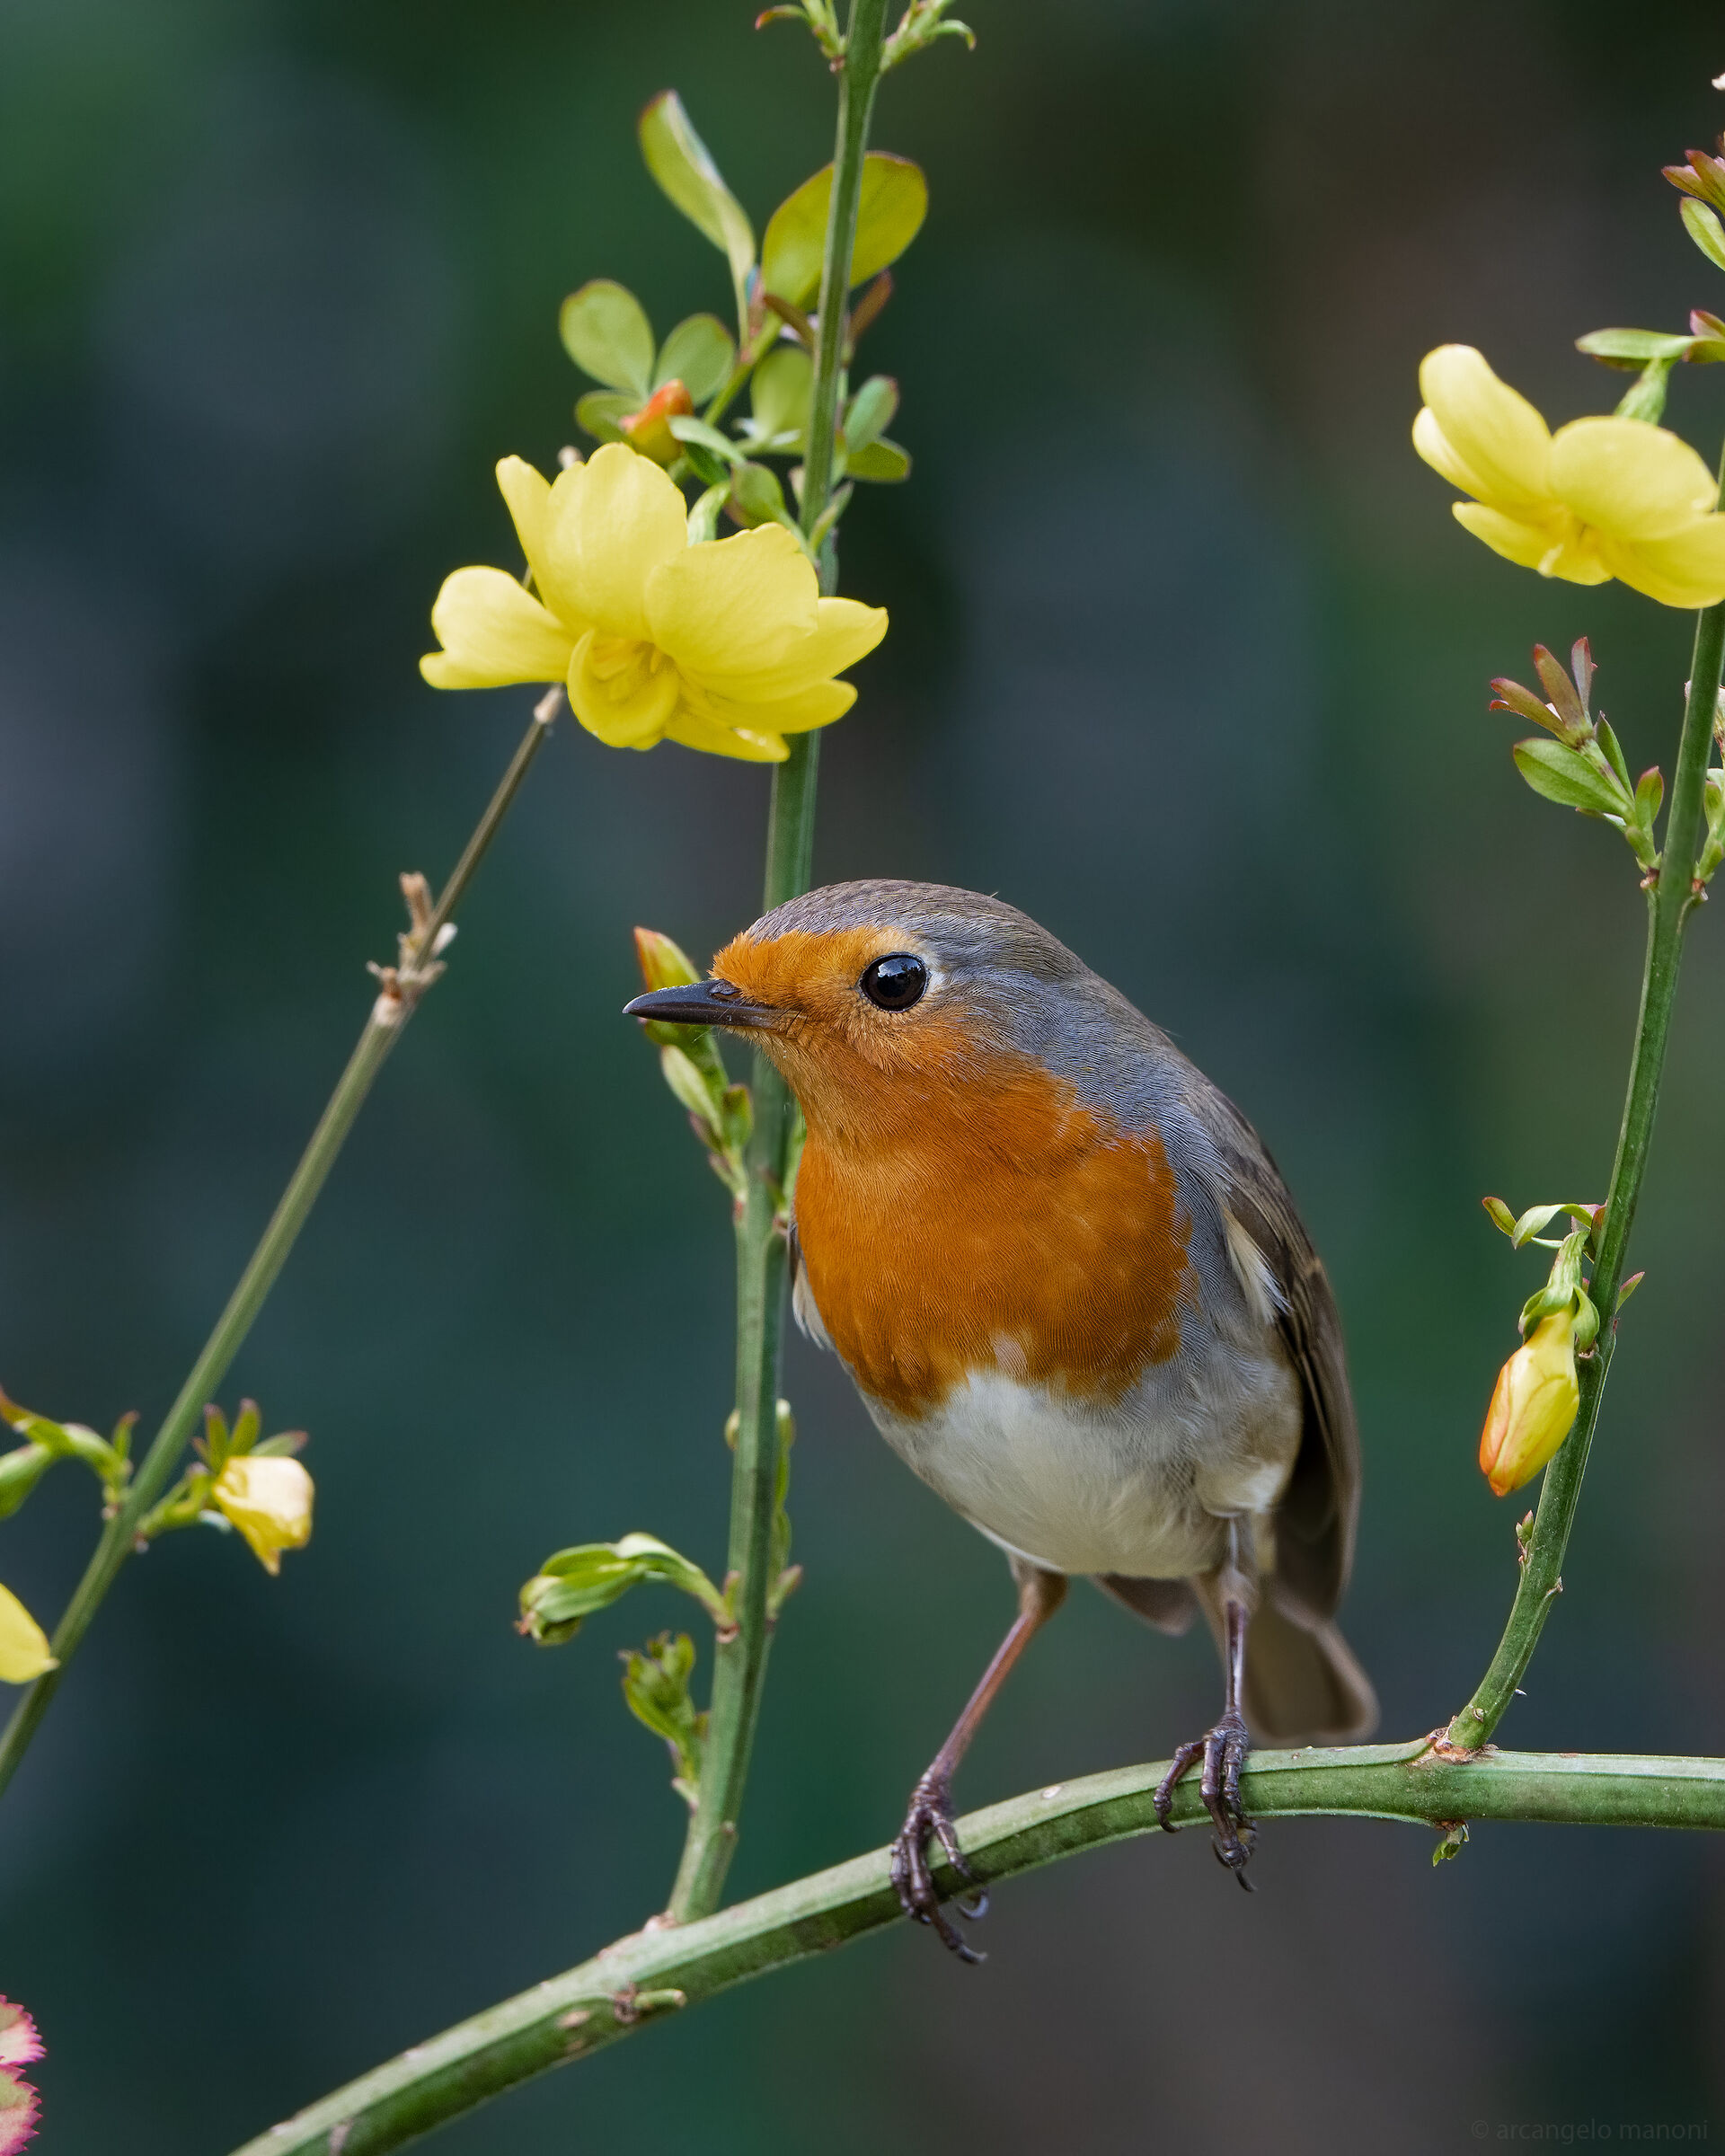 robin among the flowers...